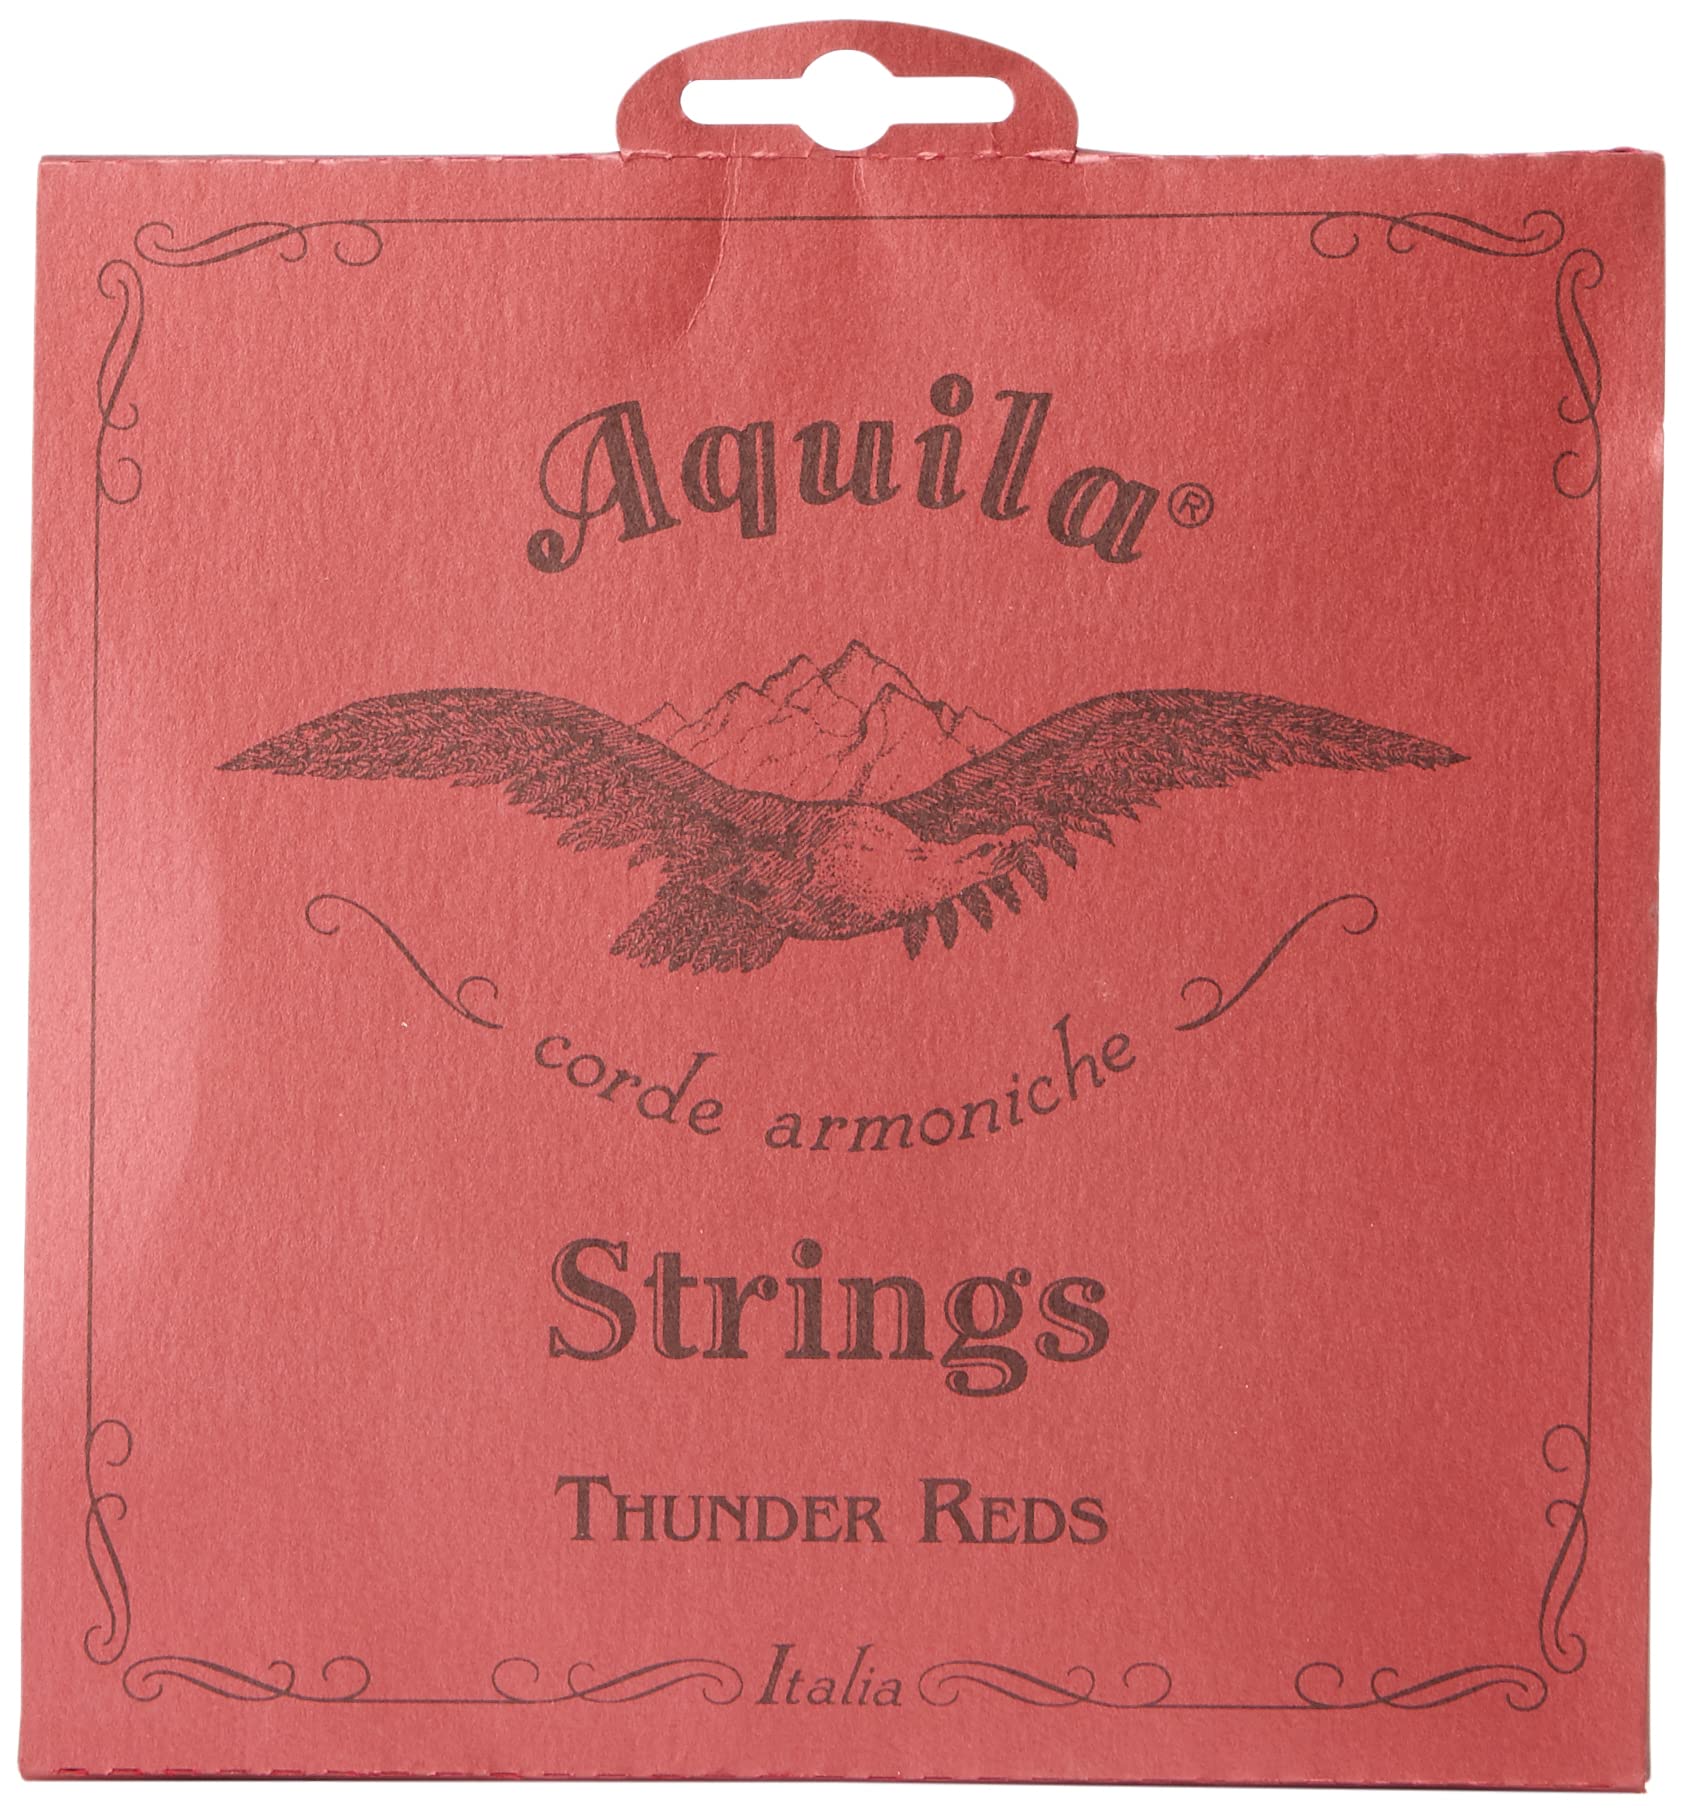 Aquila 91U Bass-Ukulele 4 string Red Series 91U, Thundergut, EADG